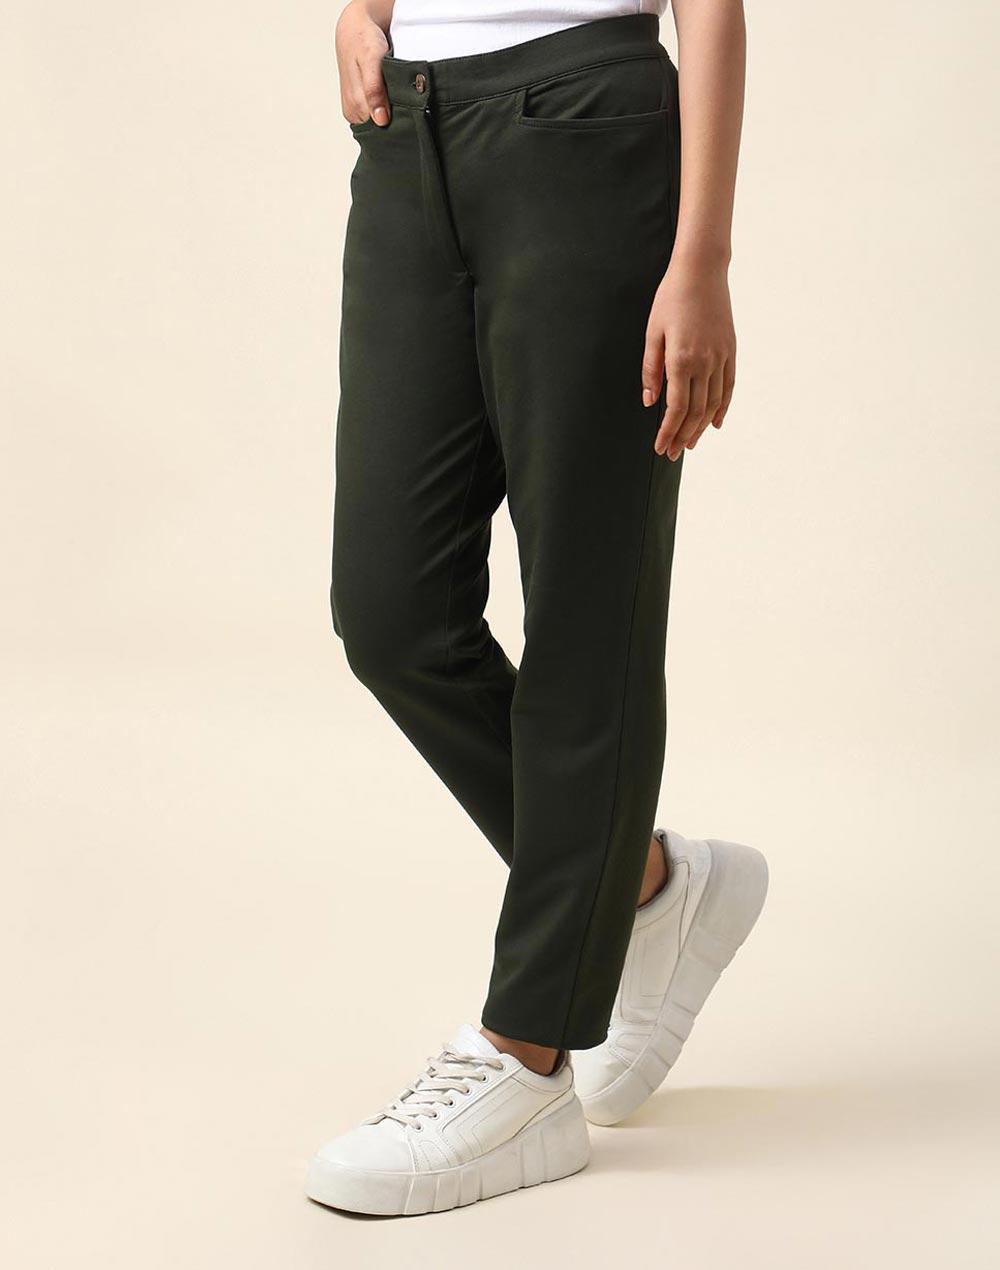 fabnu-green-cotton-blend-slim-fit-trouser